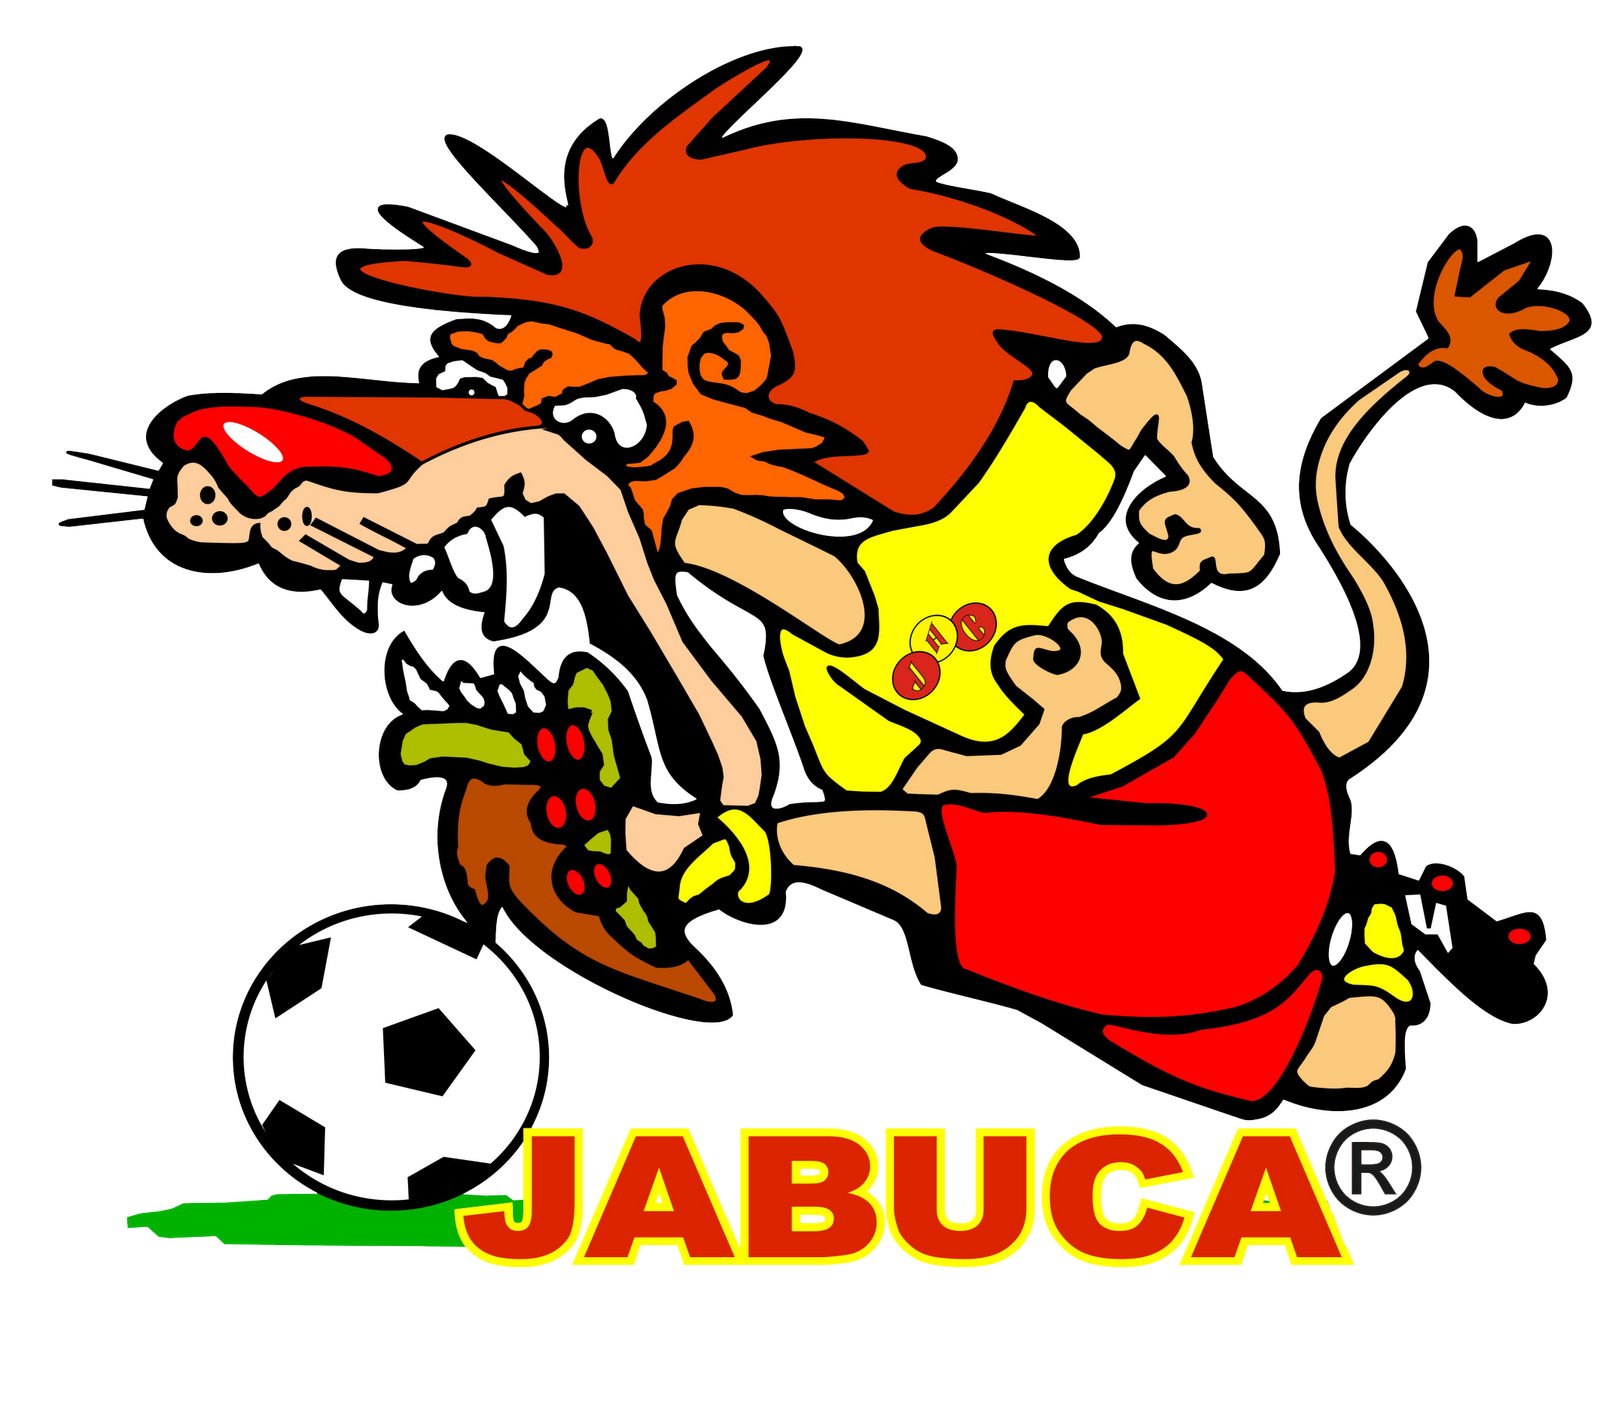 Jabaquara Atlético Clube - Wikiwand